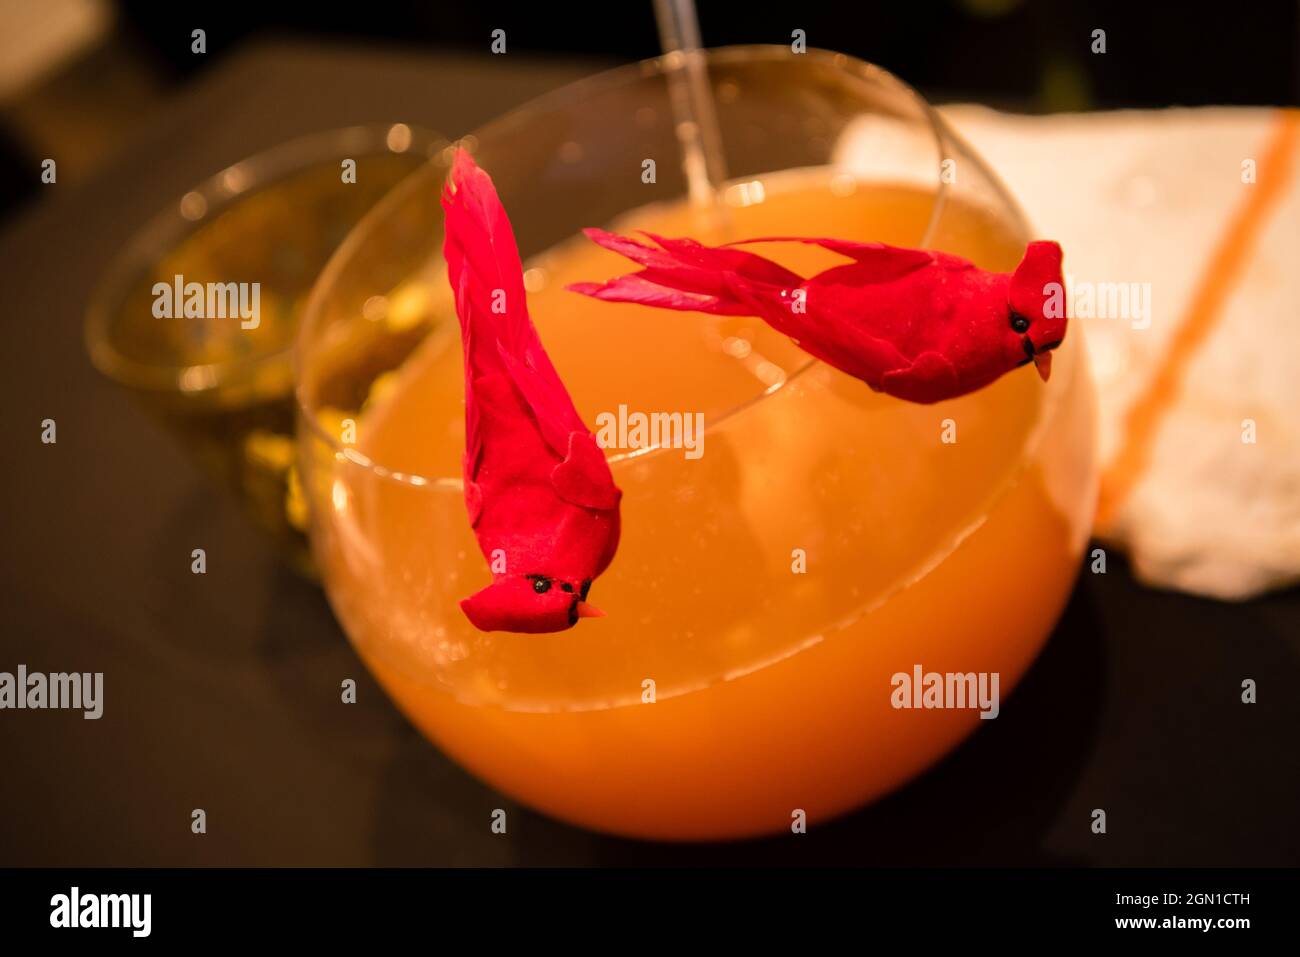 Orange citrus alcohol bowl with red cardinals. Close up Stock Photo